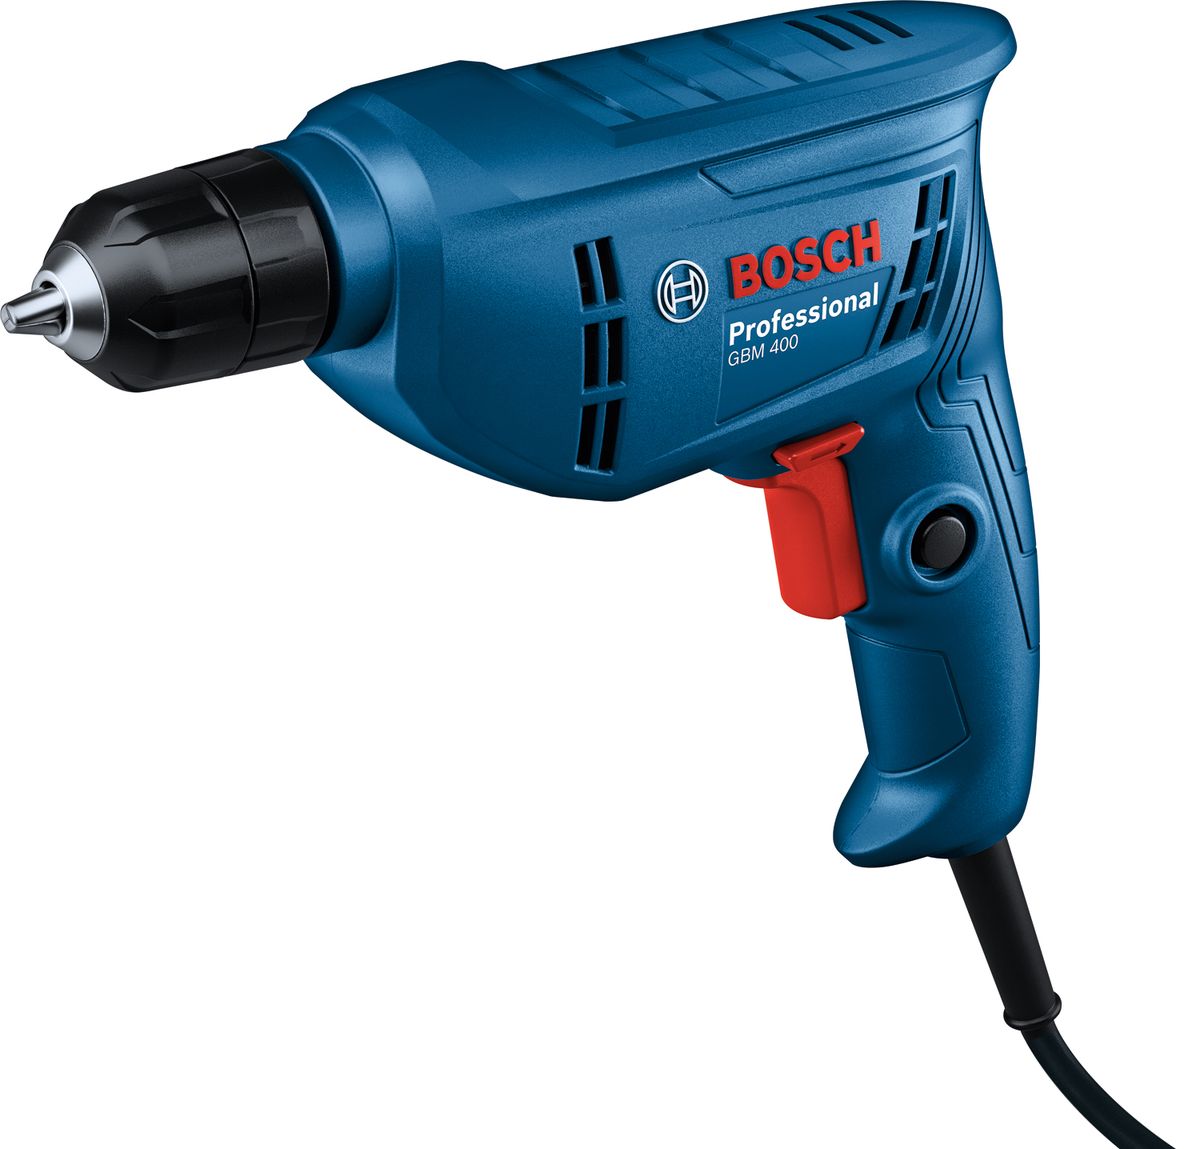 Bosch GBM400 Professional Drill